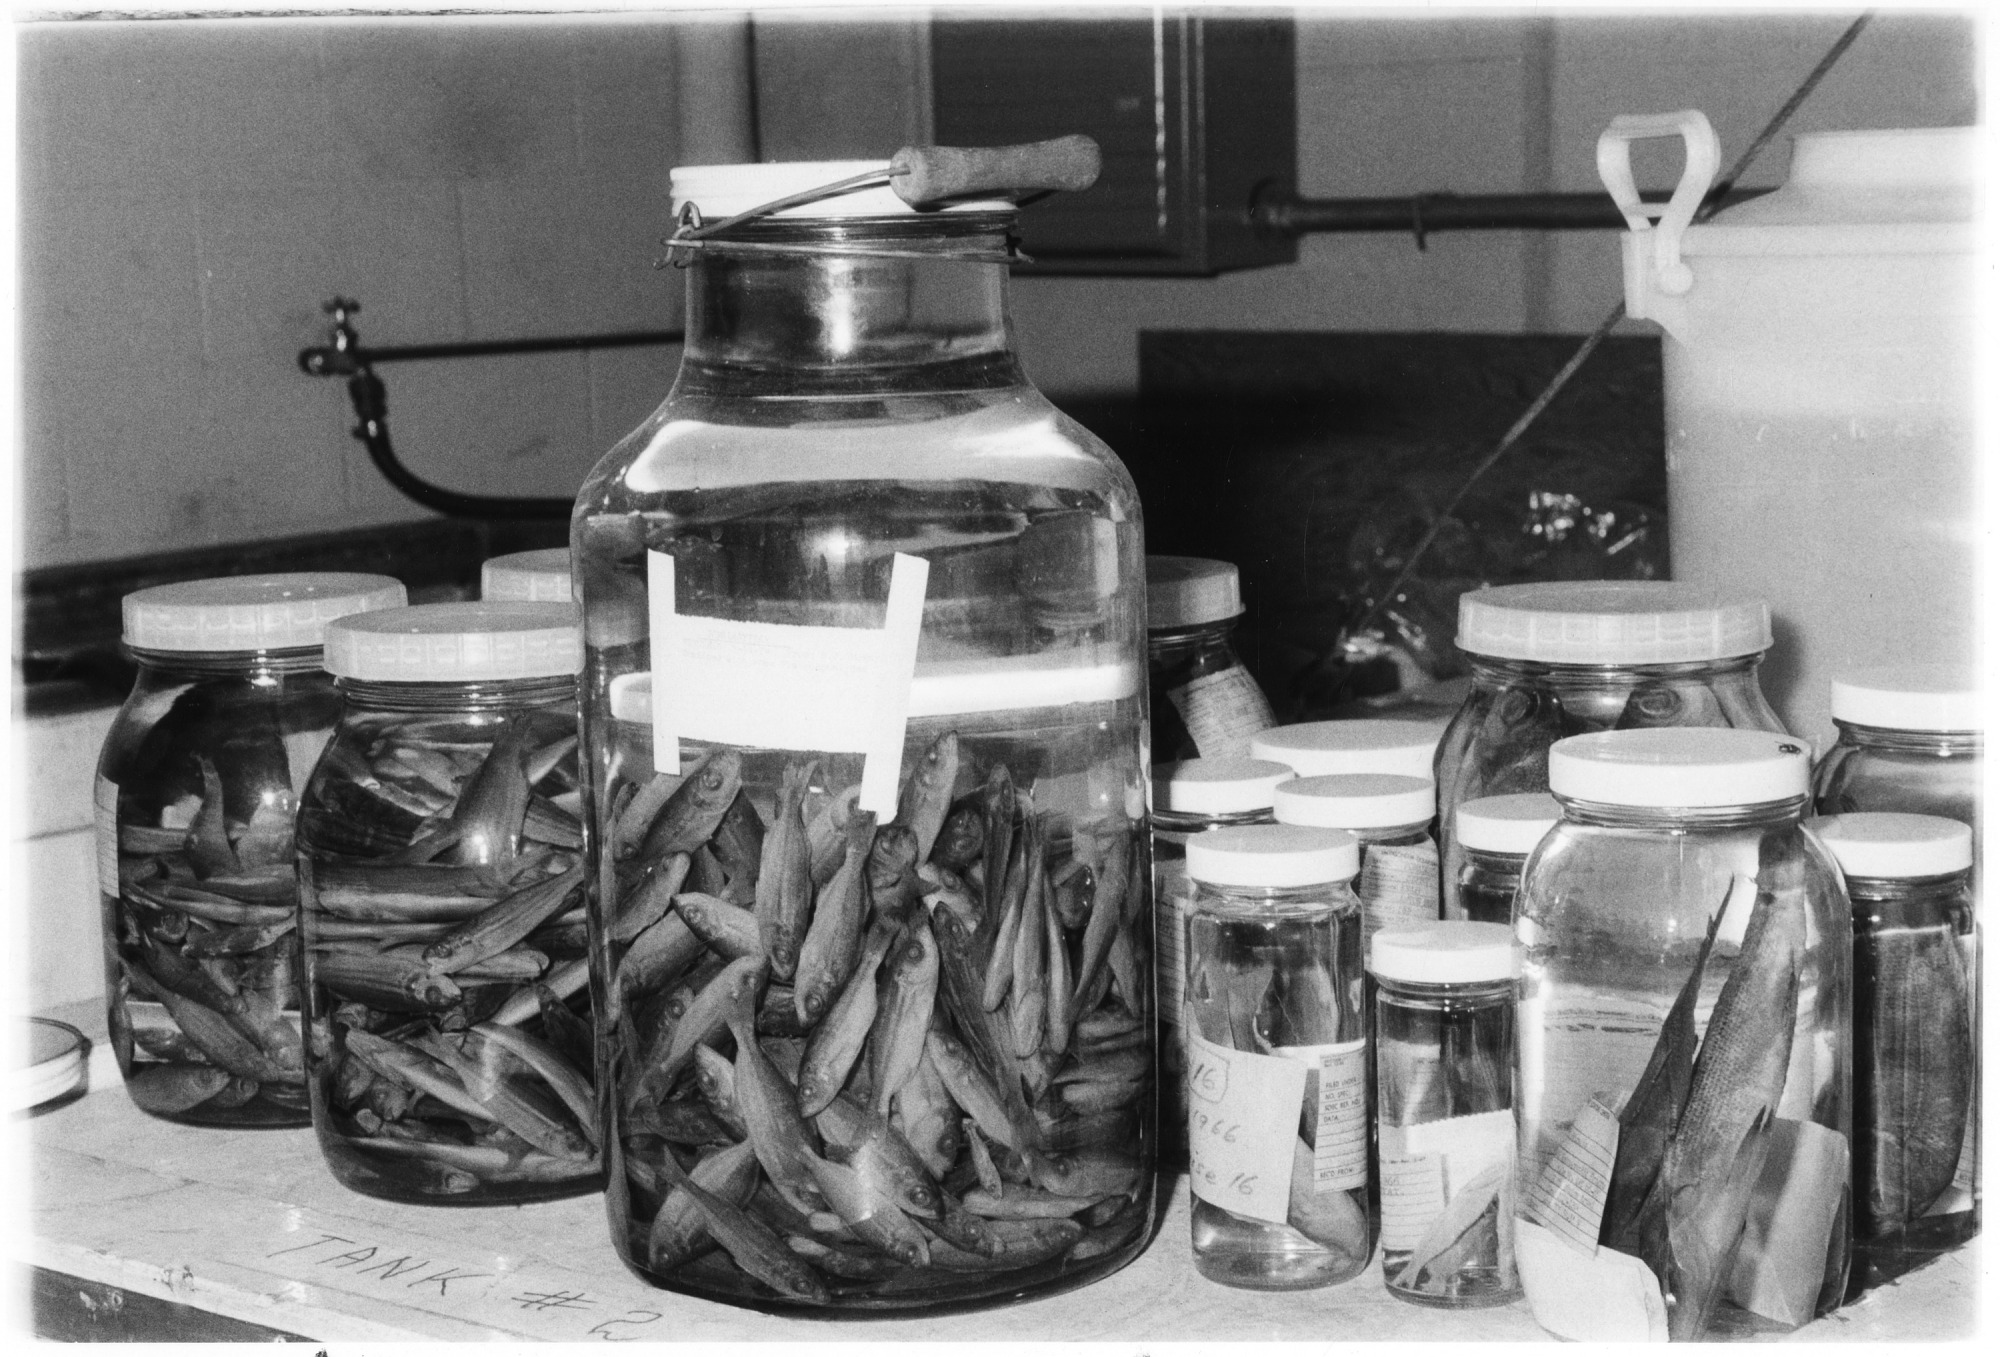 Marine specimens in jars